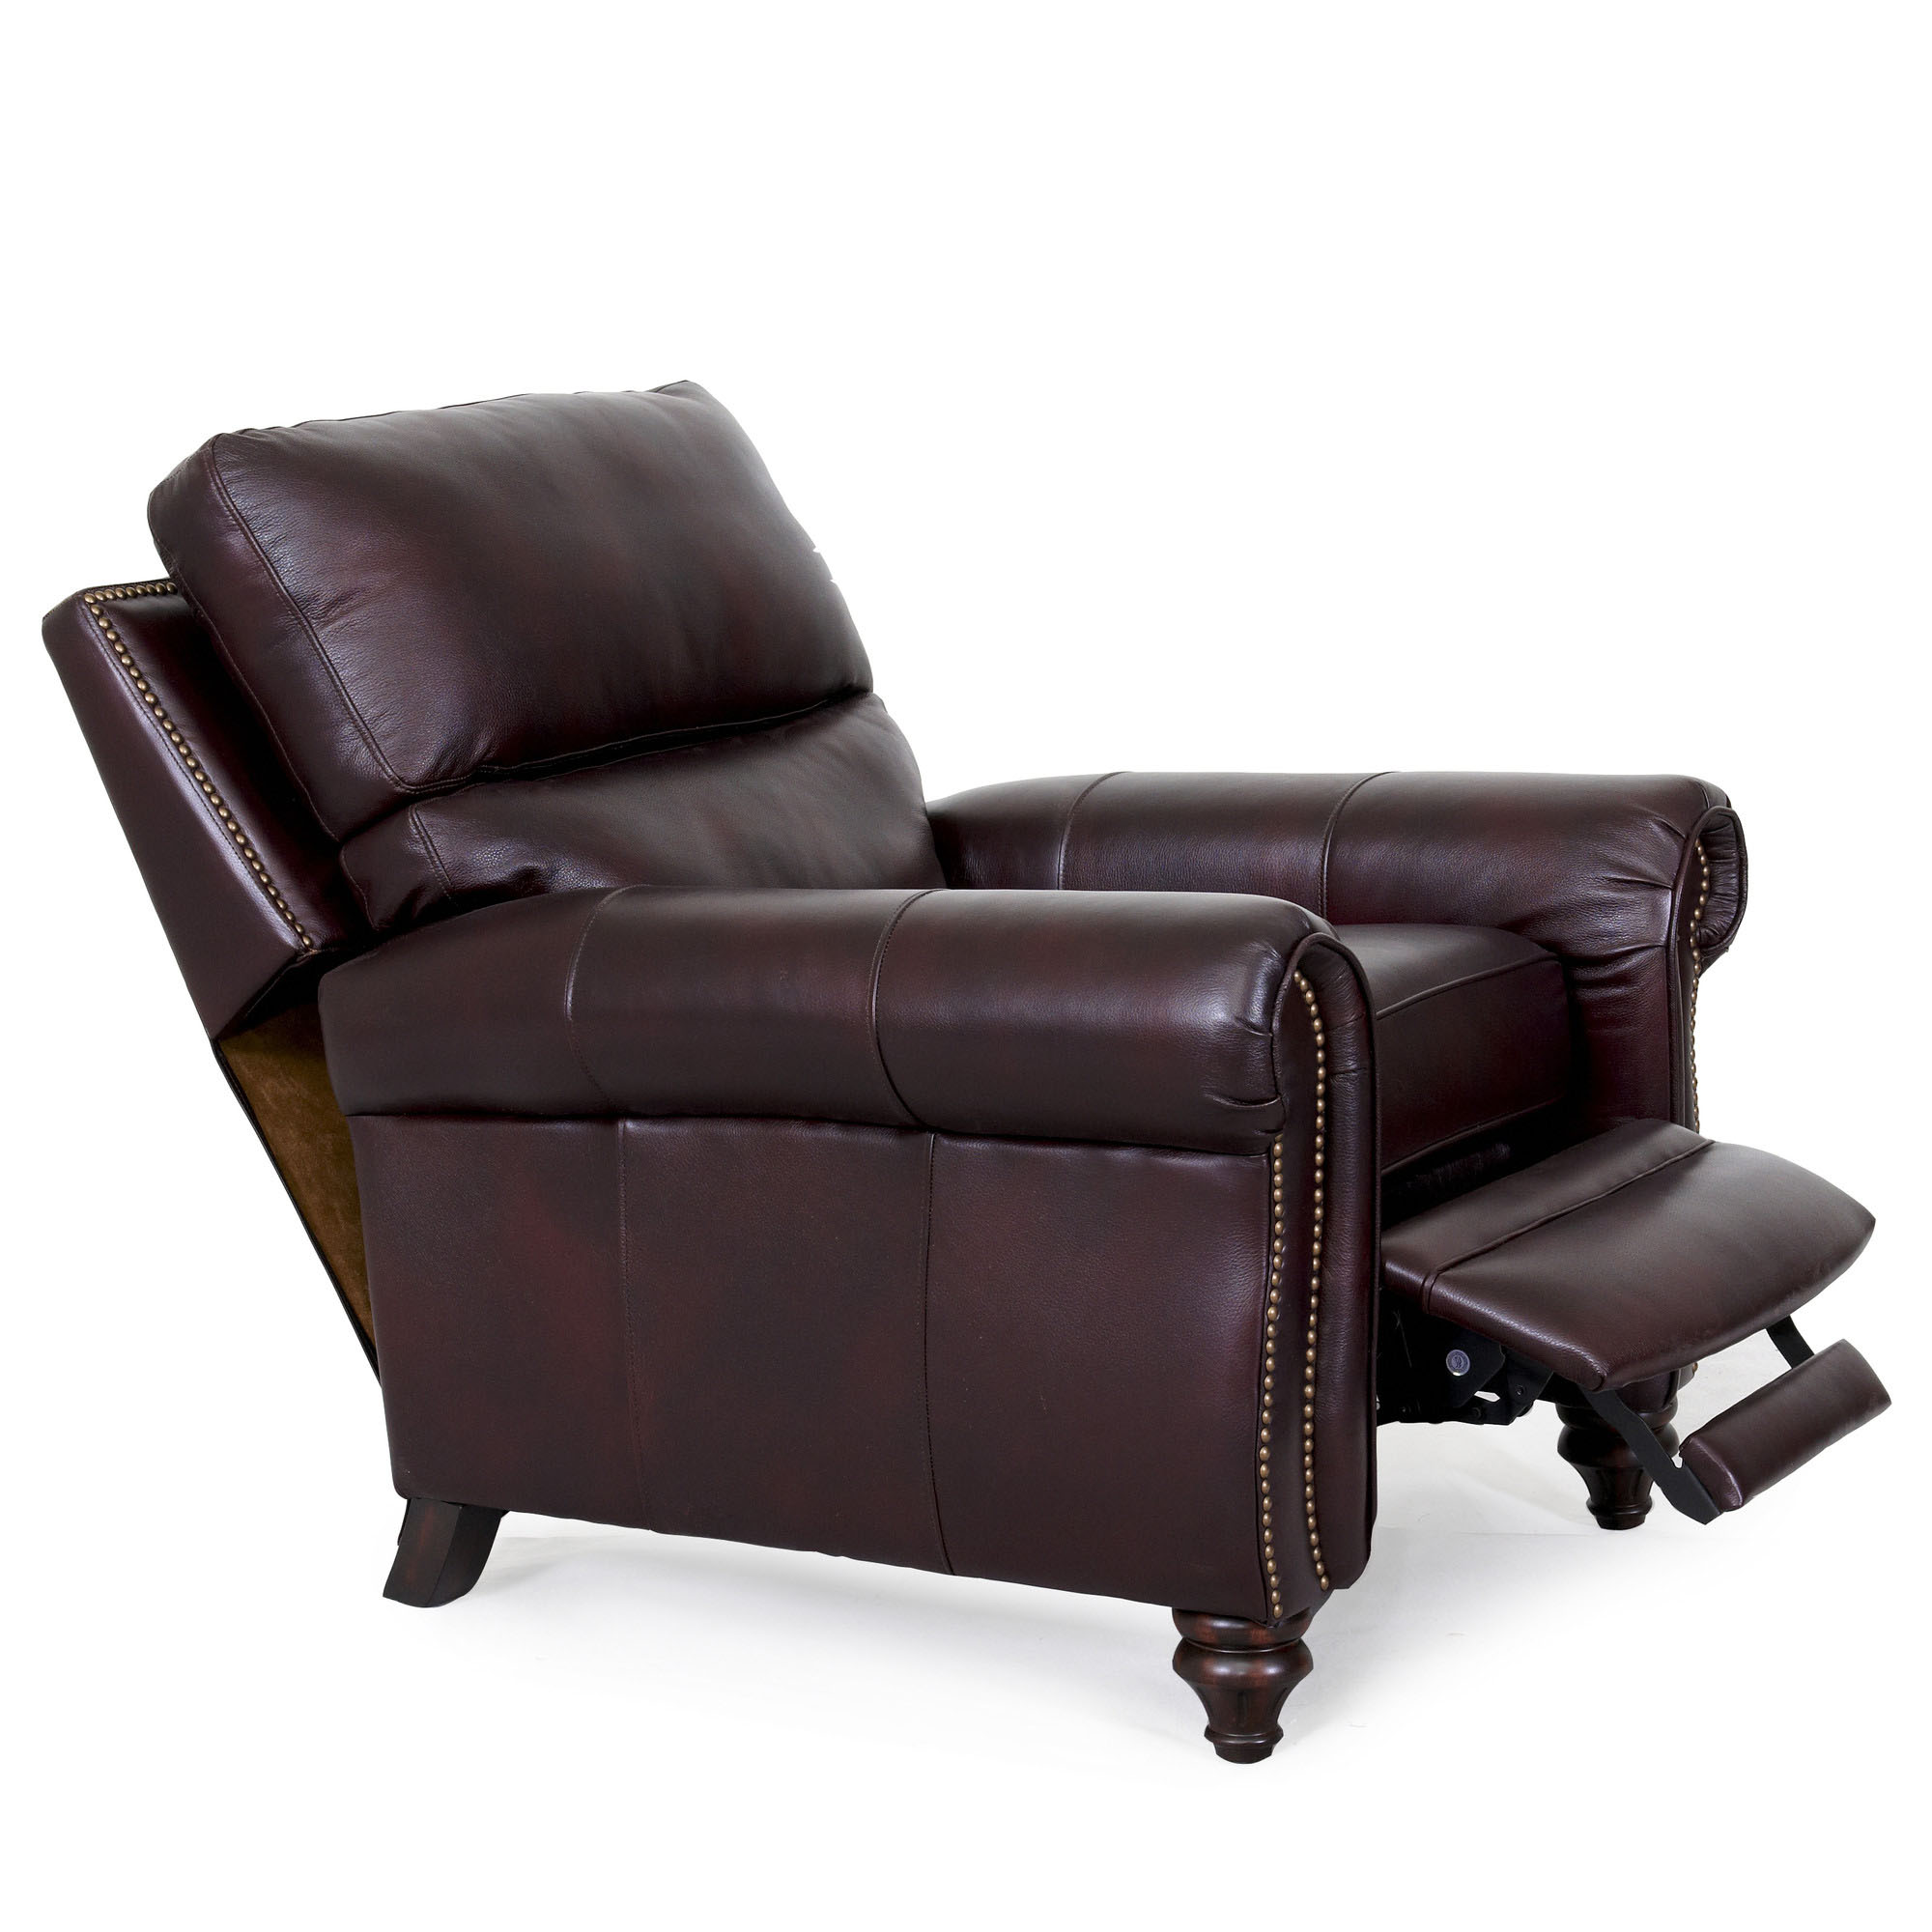 Barcalounger Dalton II Recliner Chair - Leather Recliner Chair